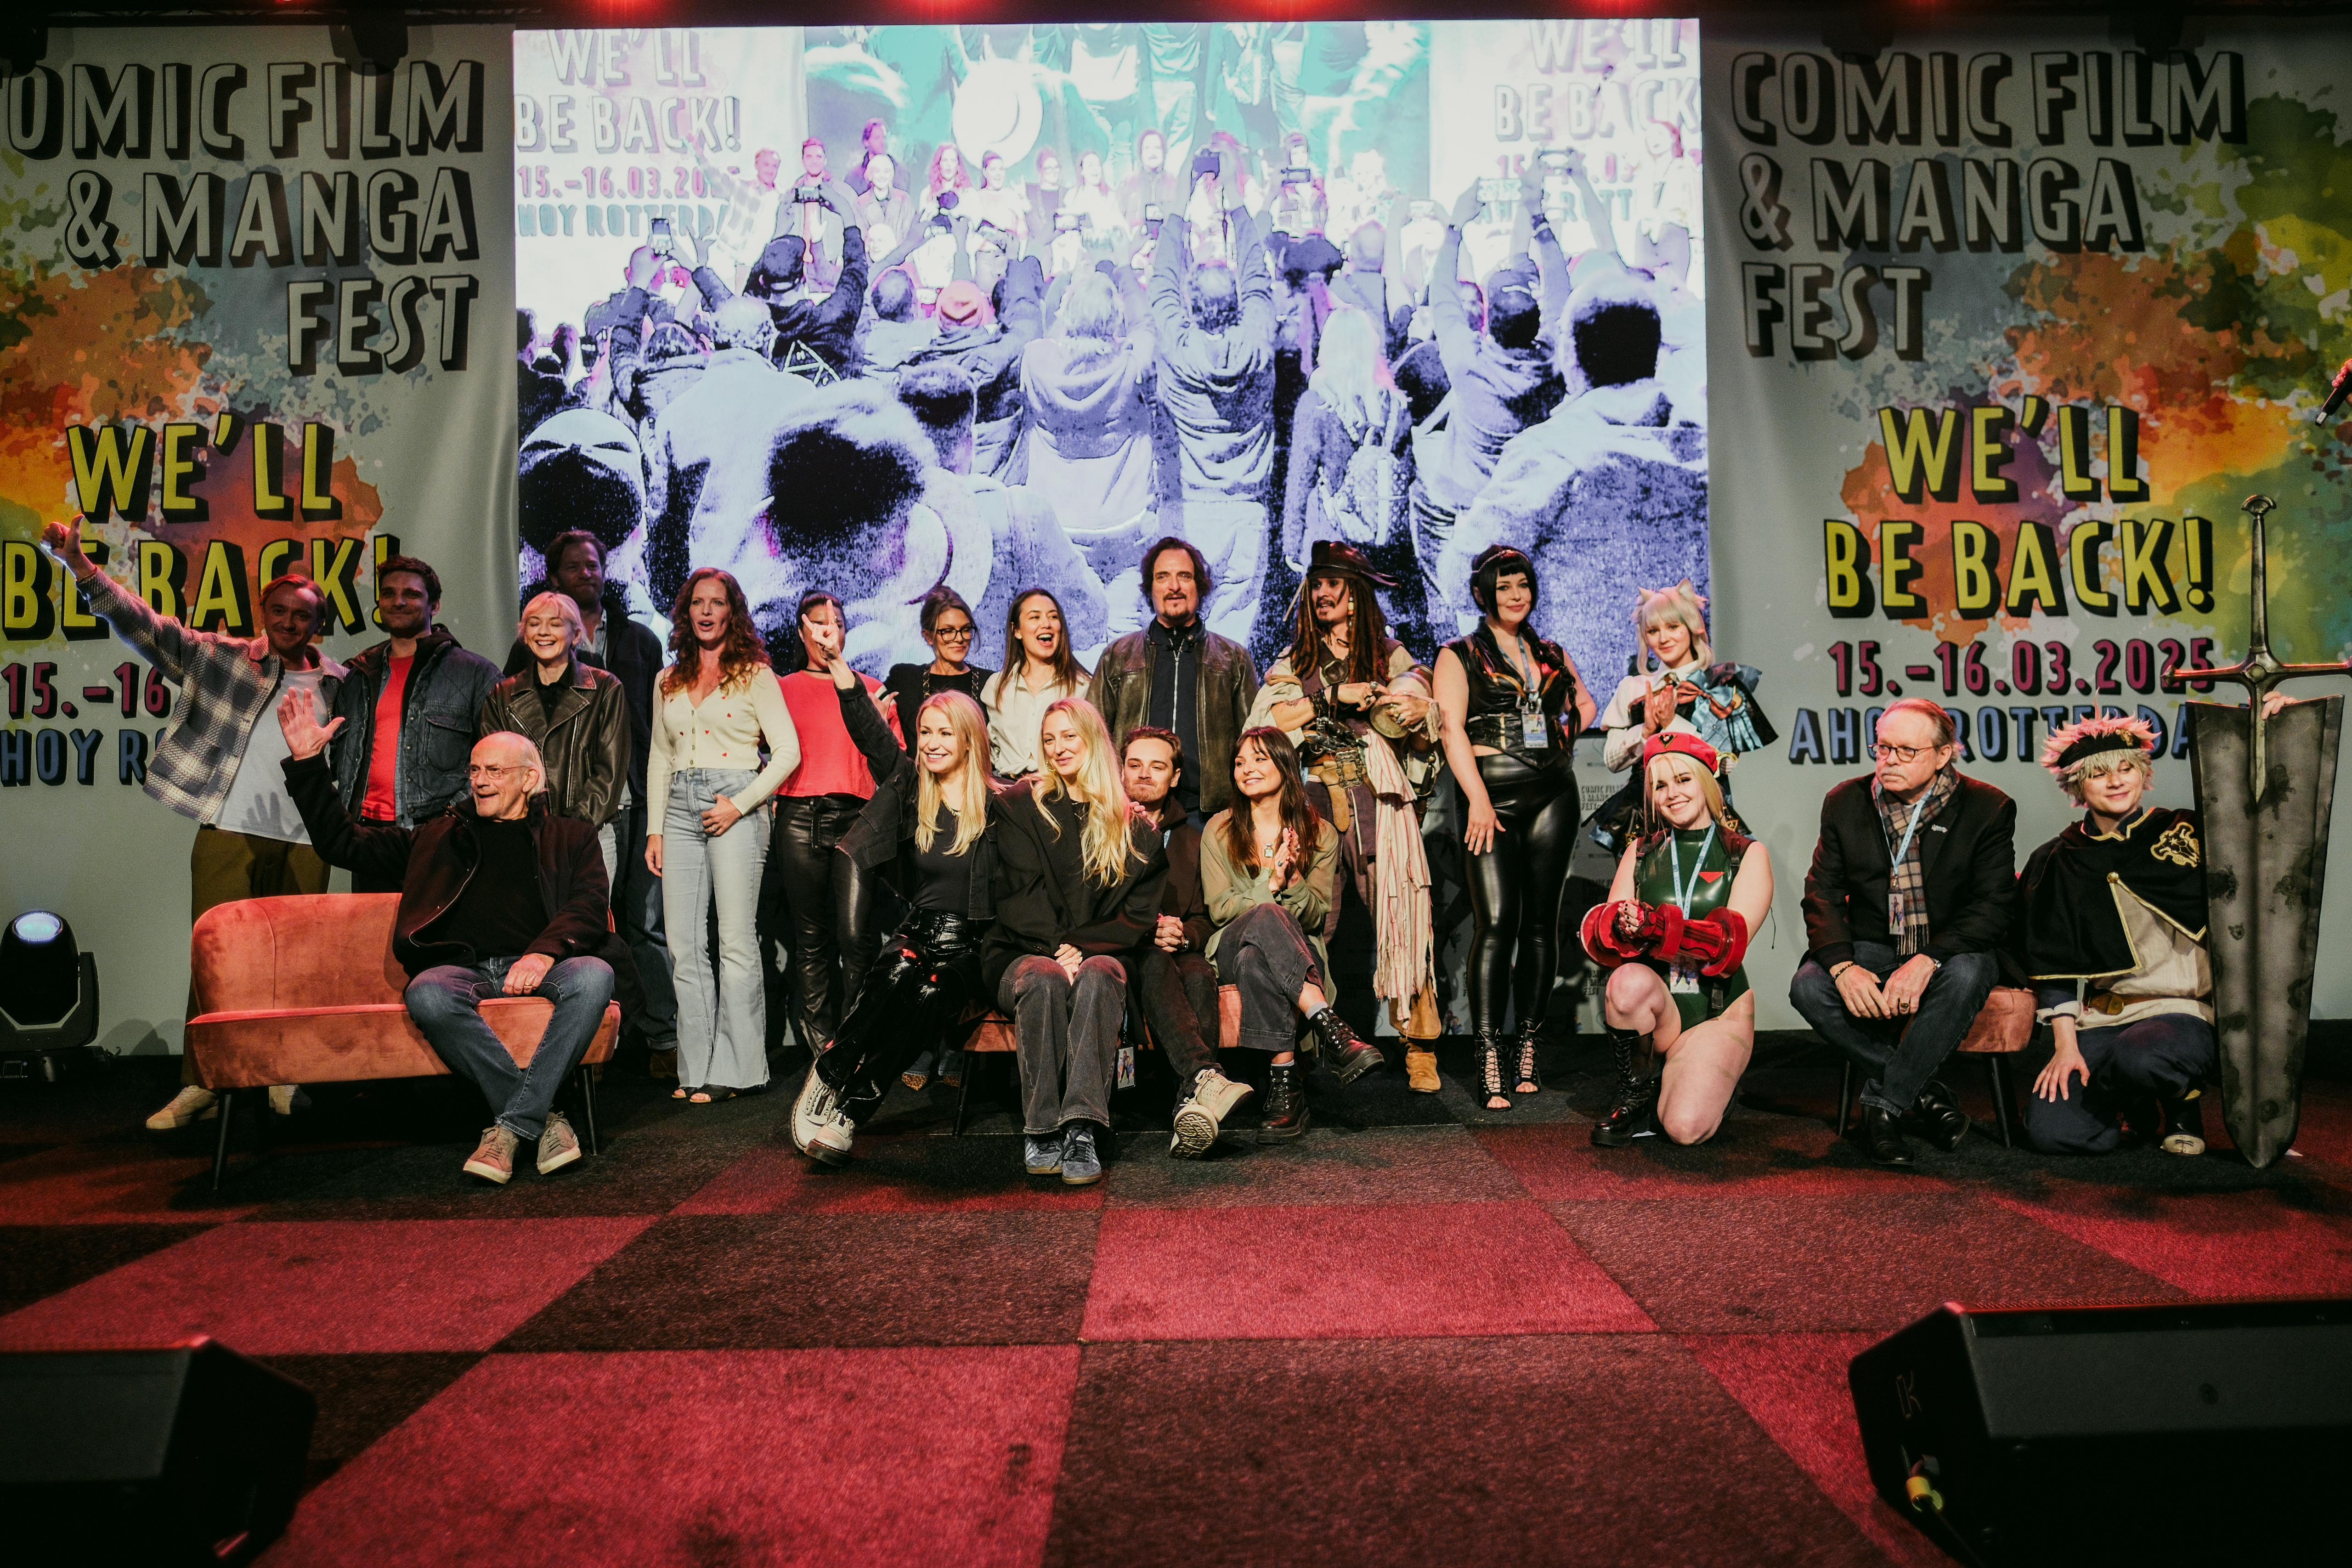 Recap: Comic Film & Manga Fest's triumphant return to Rotterdam